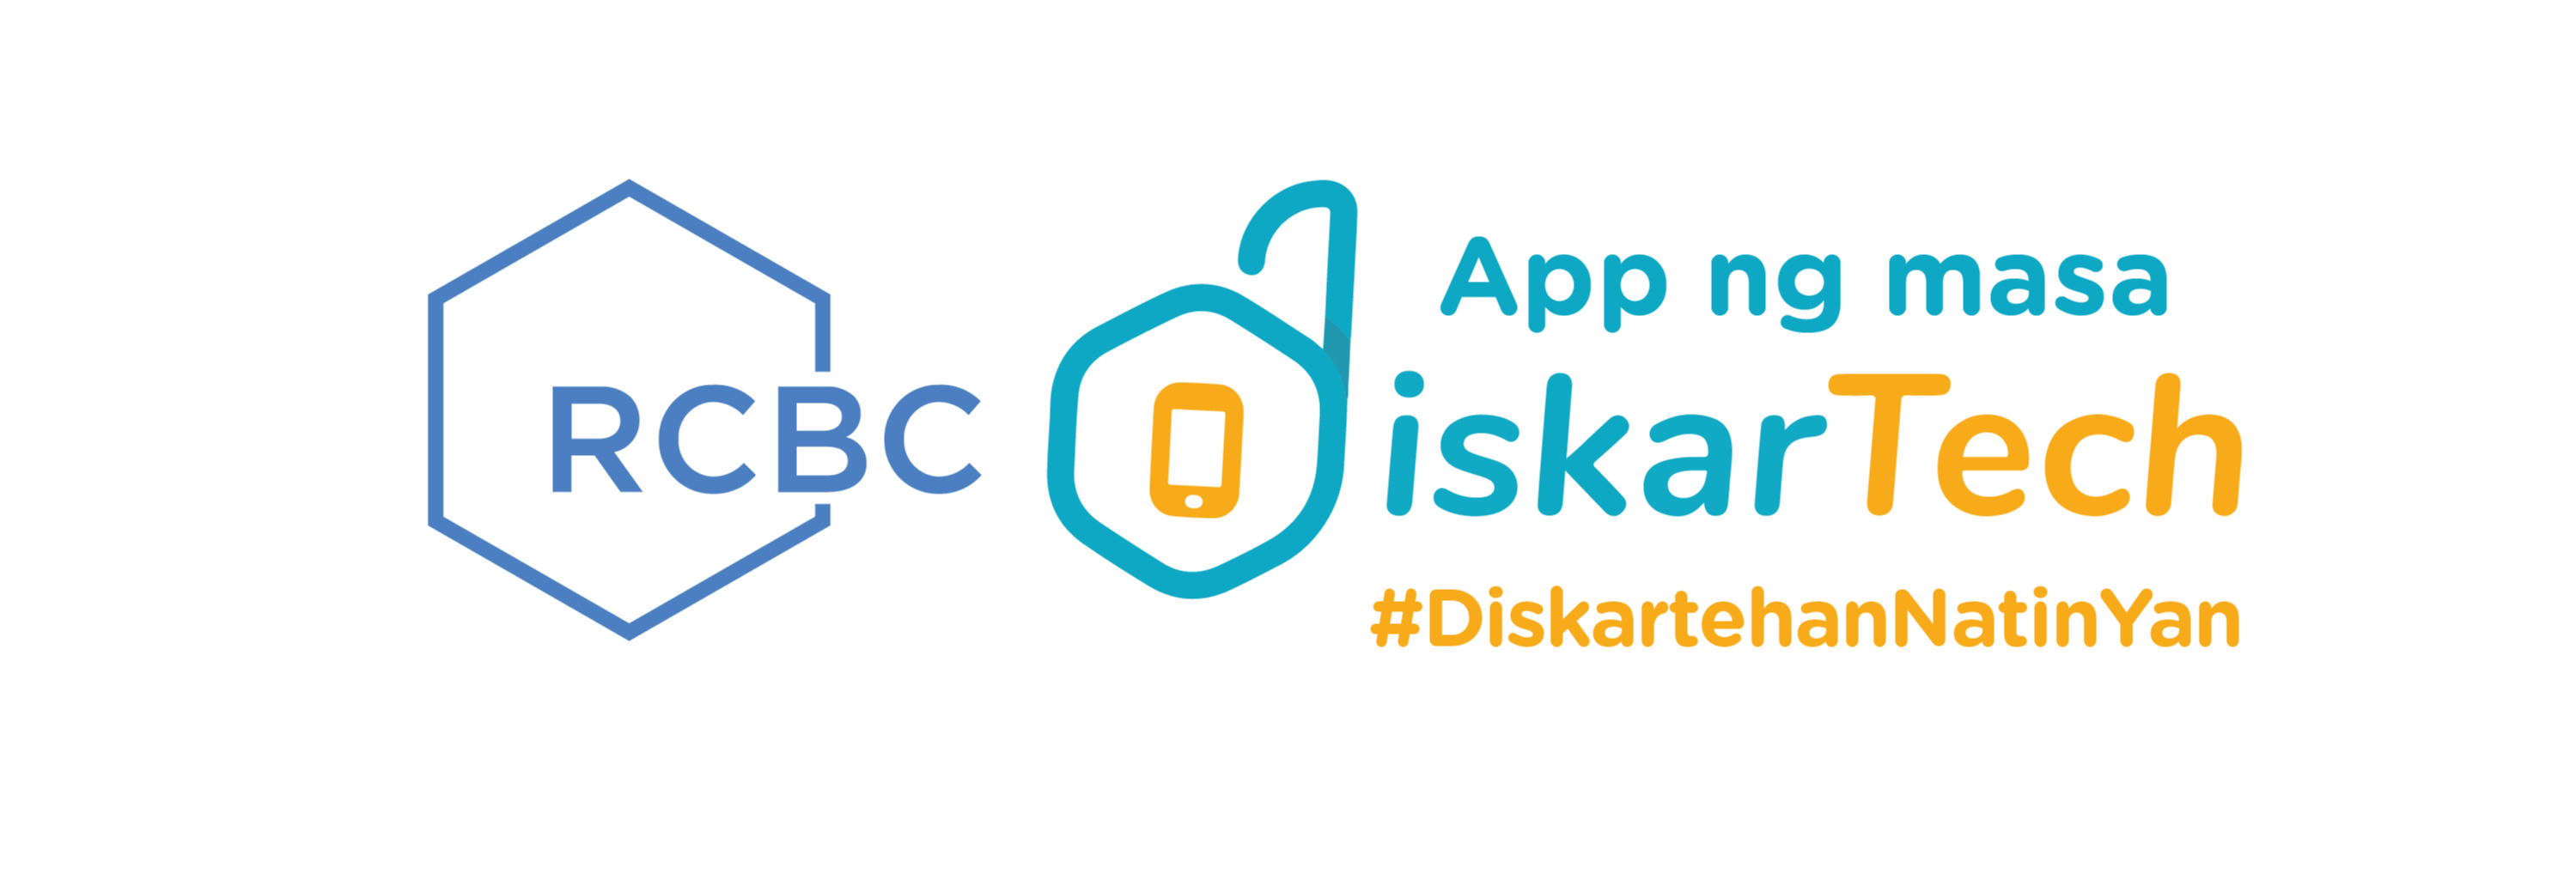 DiskarTech logo